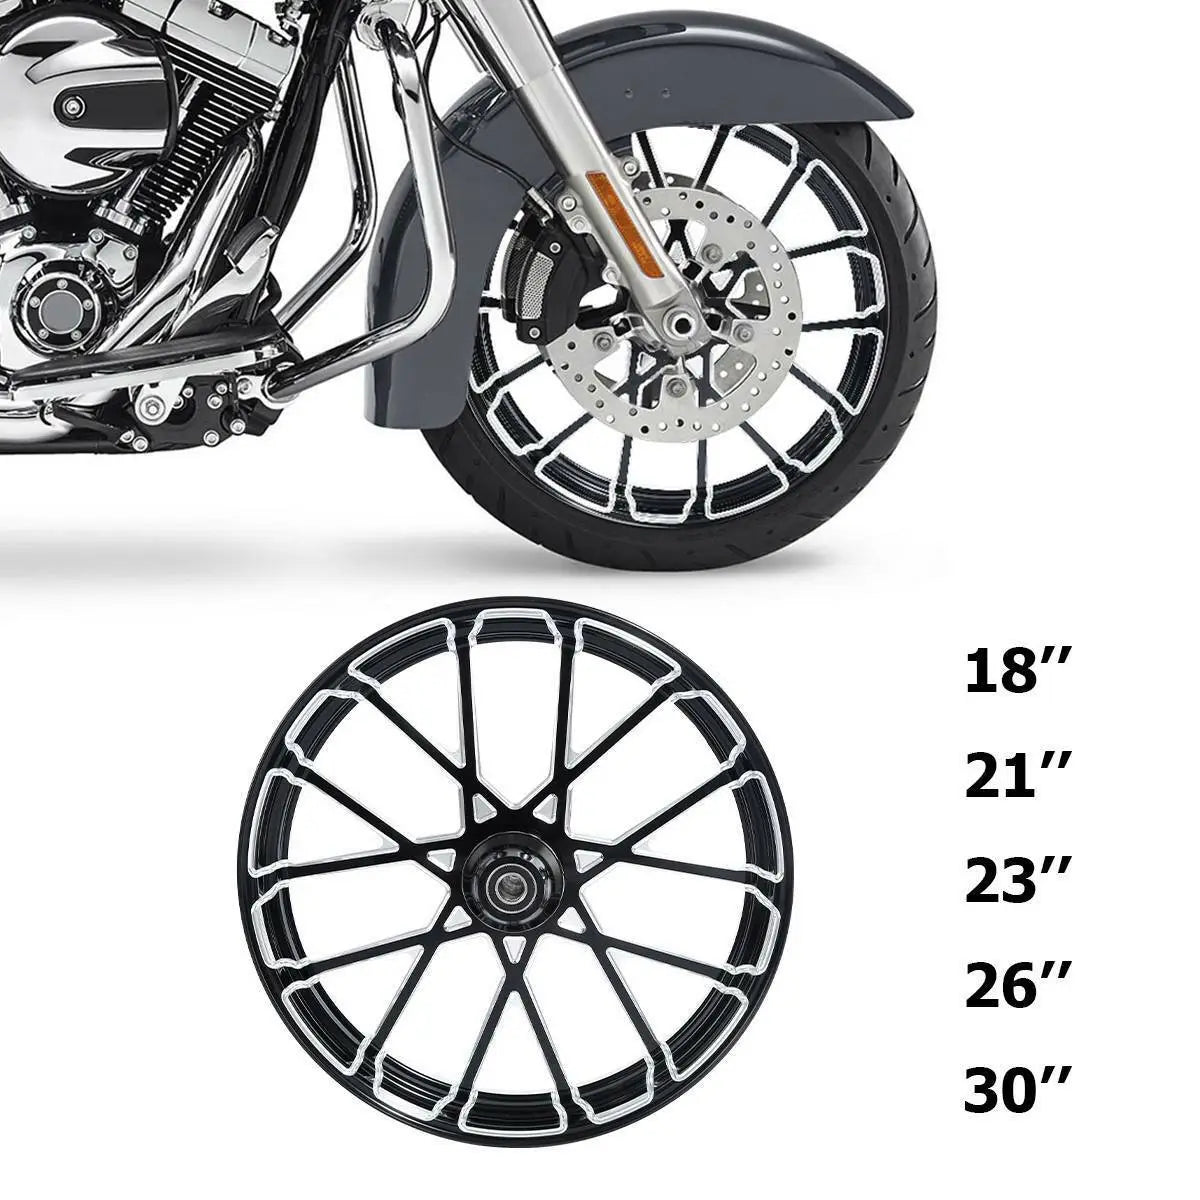 Voodoo Cycle House Custom Wheel & Hub Assembly For Harley-Davidson & Custom Applications 18" 21" 23" 26" 30" inch